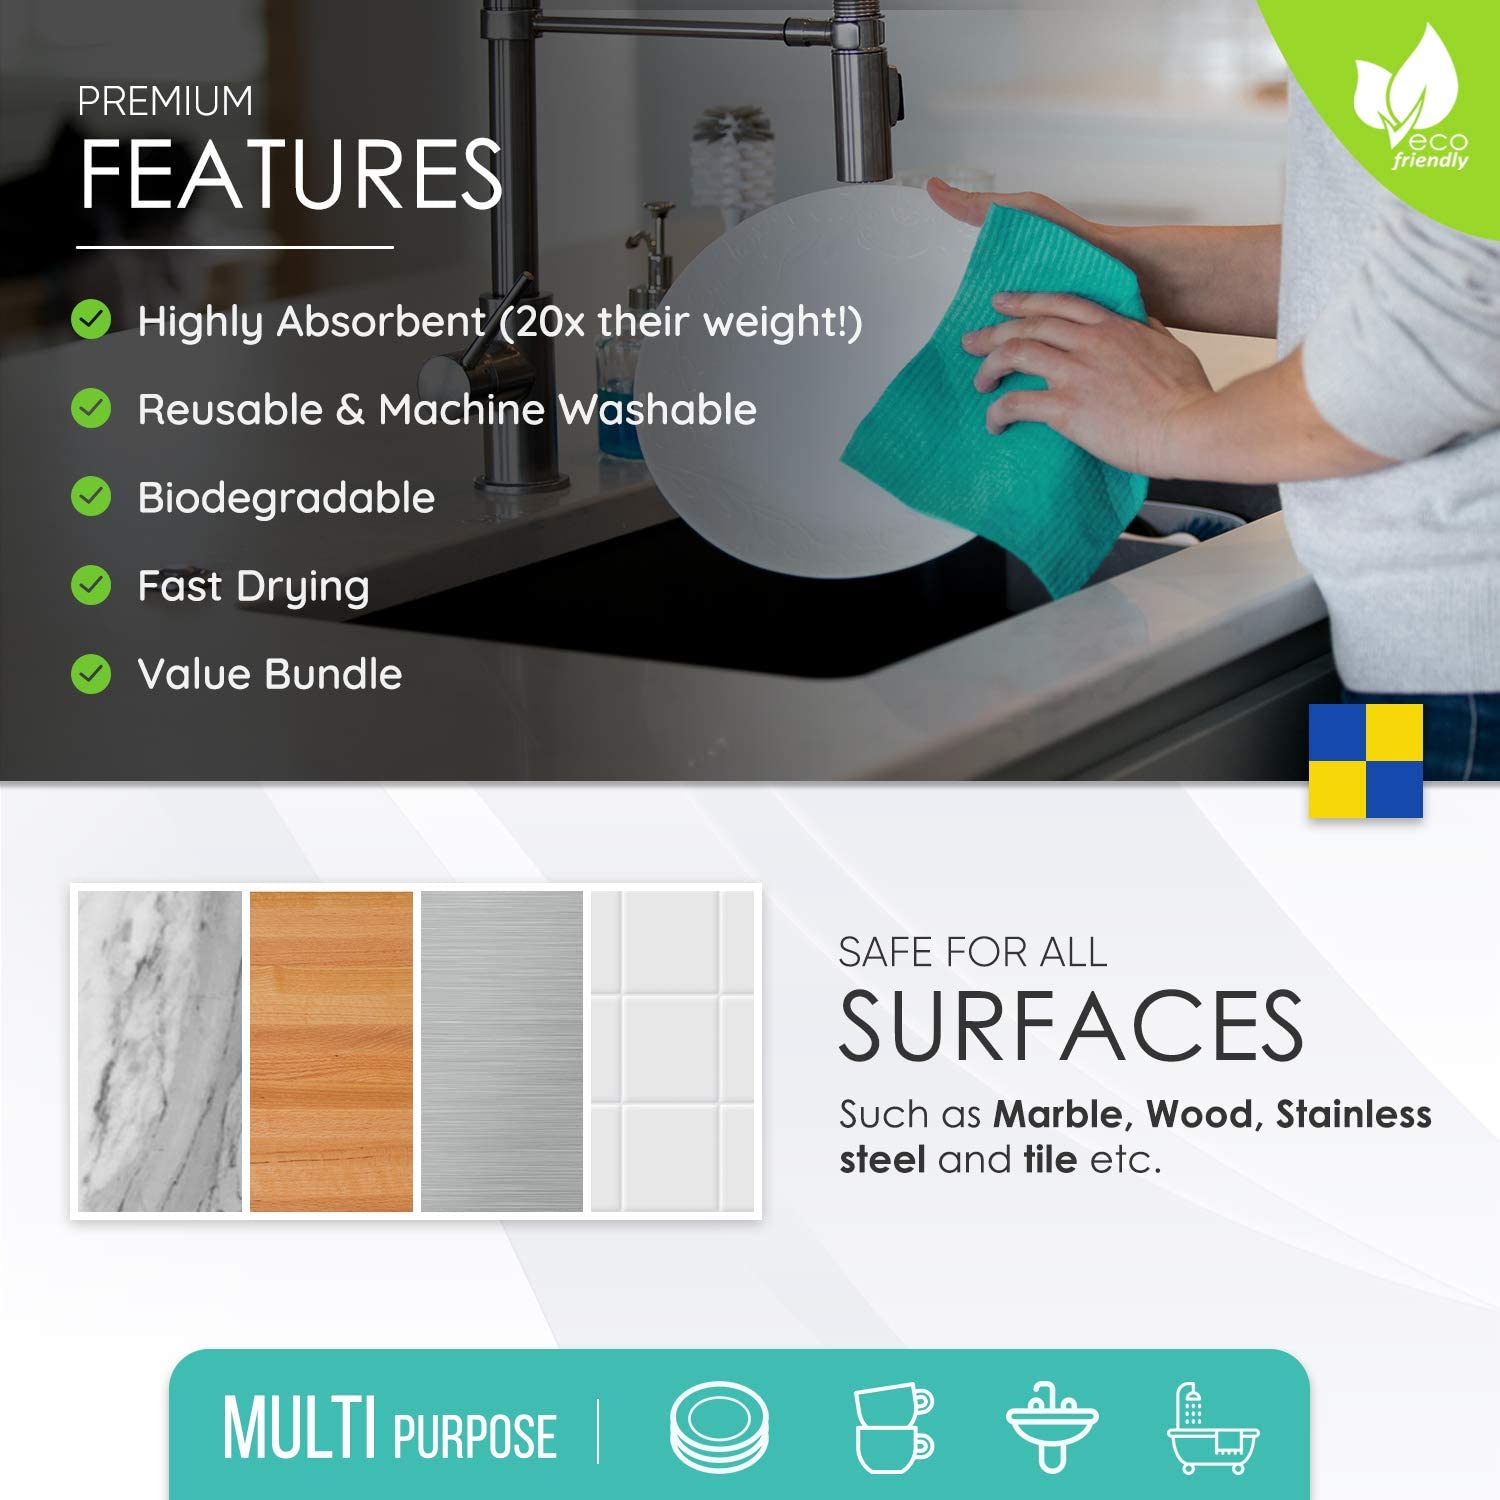 Eco-Friendly Reusable Swedish Cellulose Dishcloths